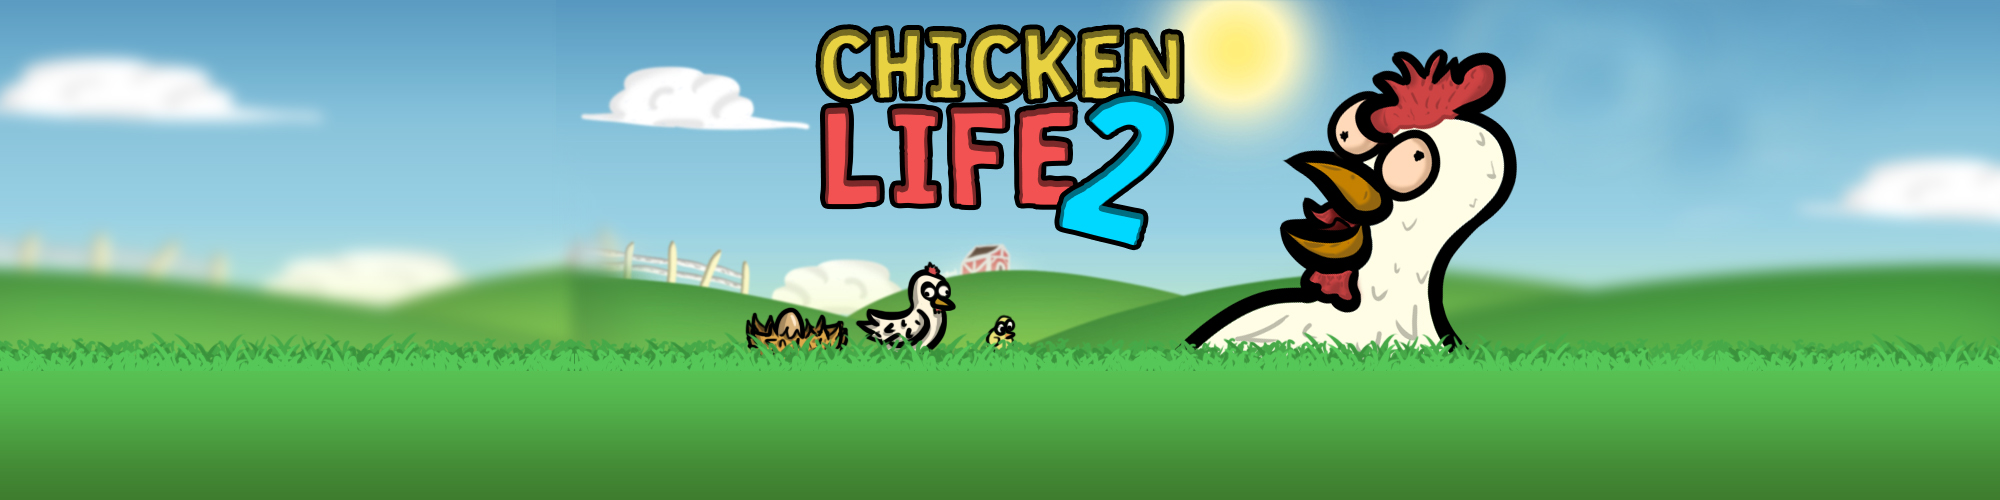 Chicken Life 2